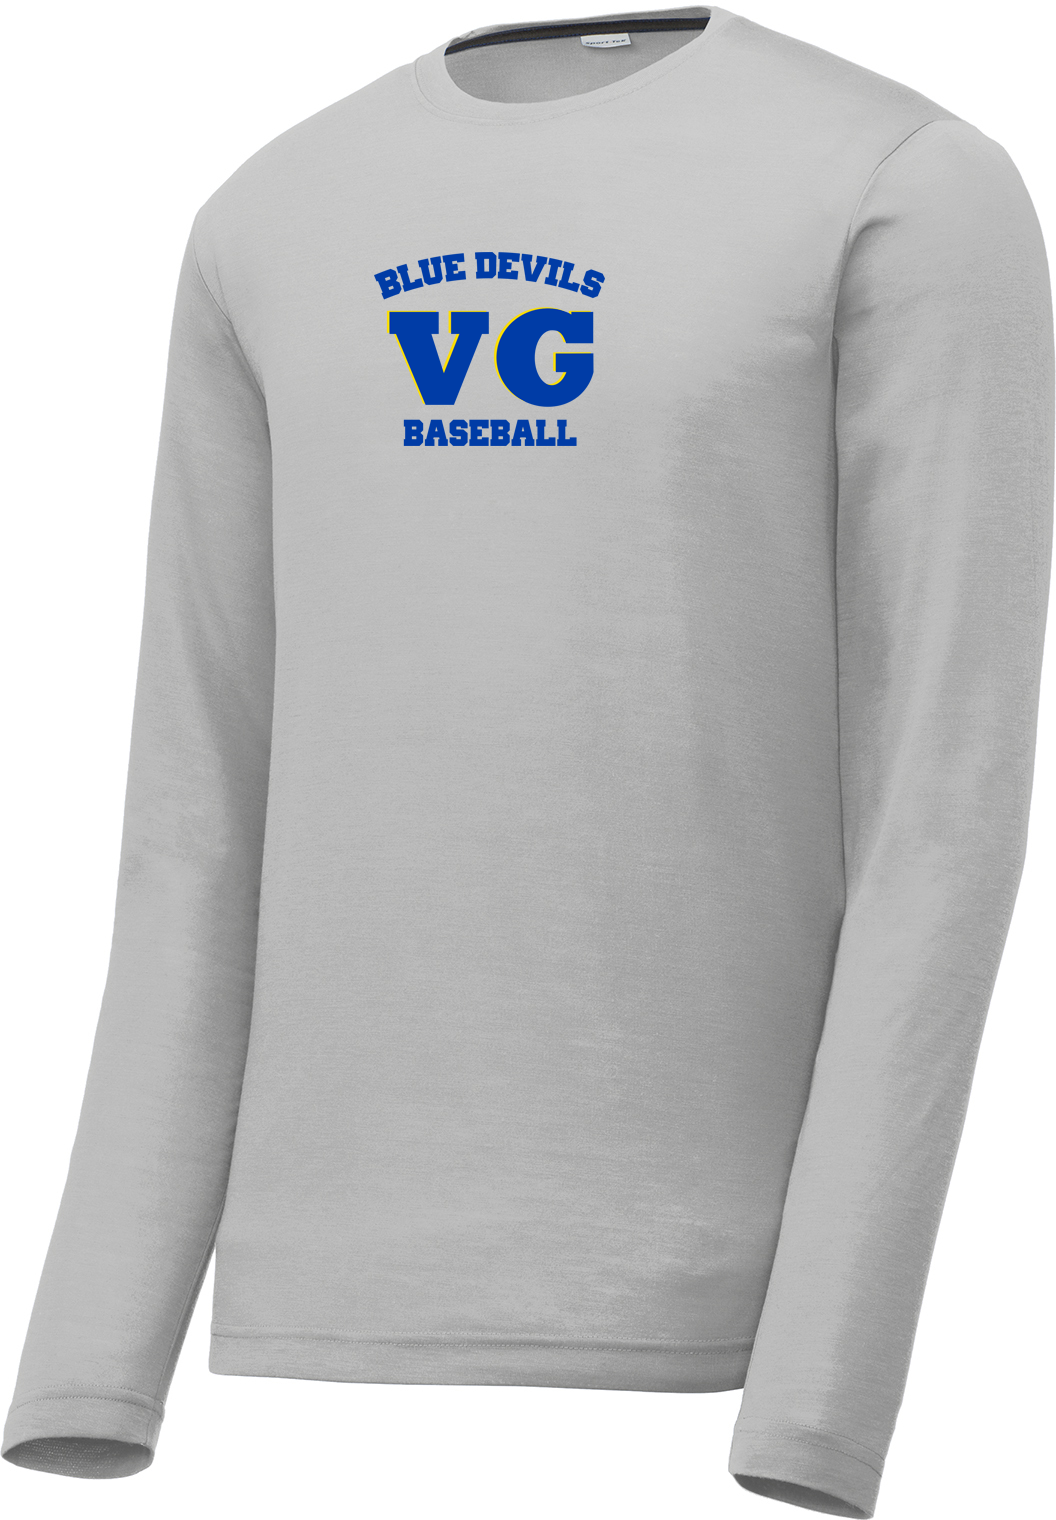 Blue Devils Baseball Long Sleeve CottonTouch Performance Shirt